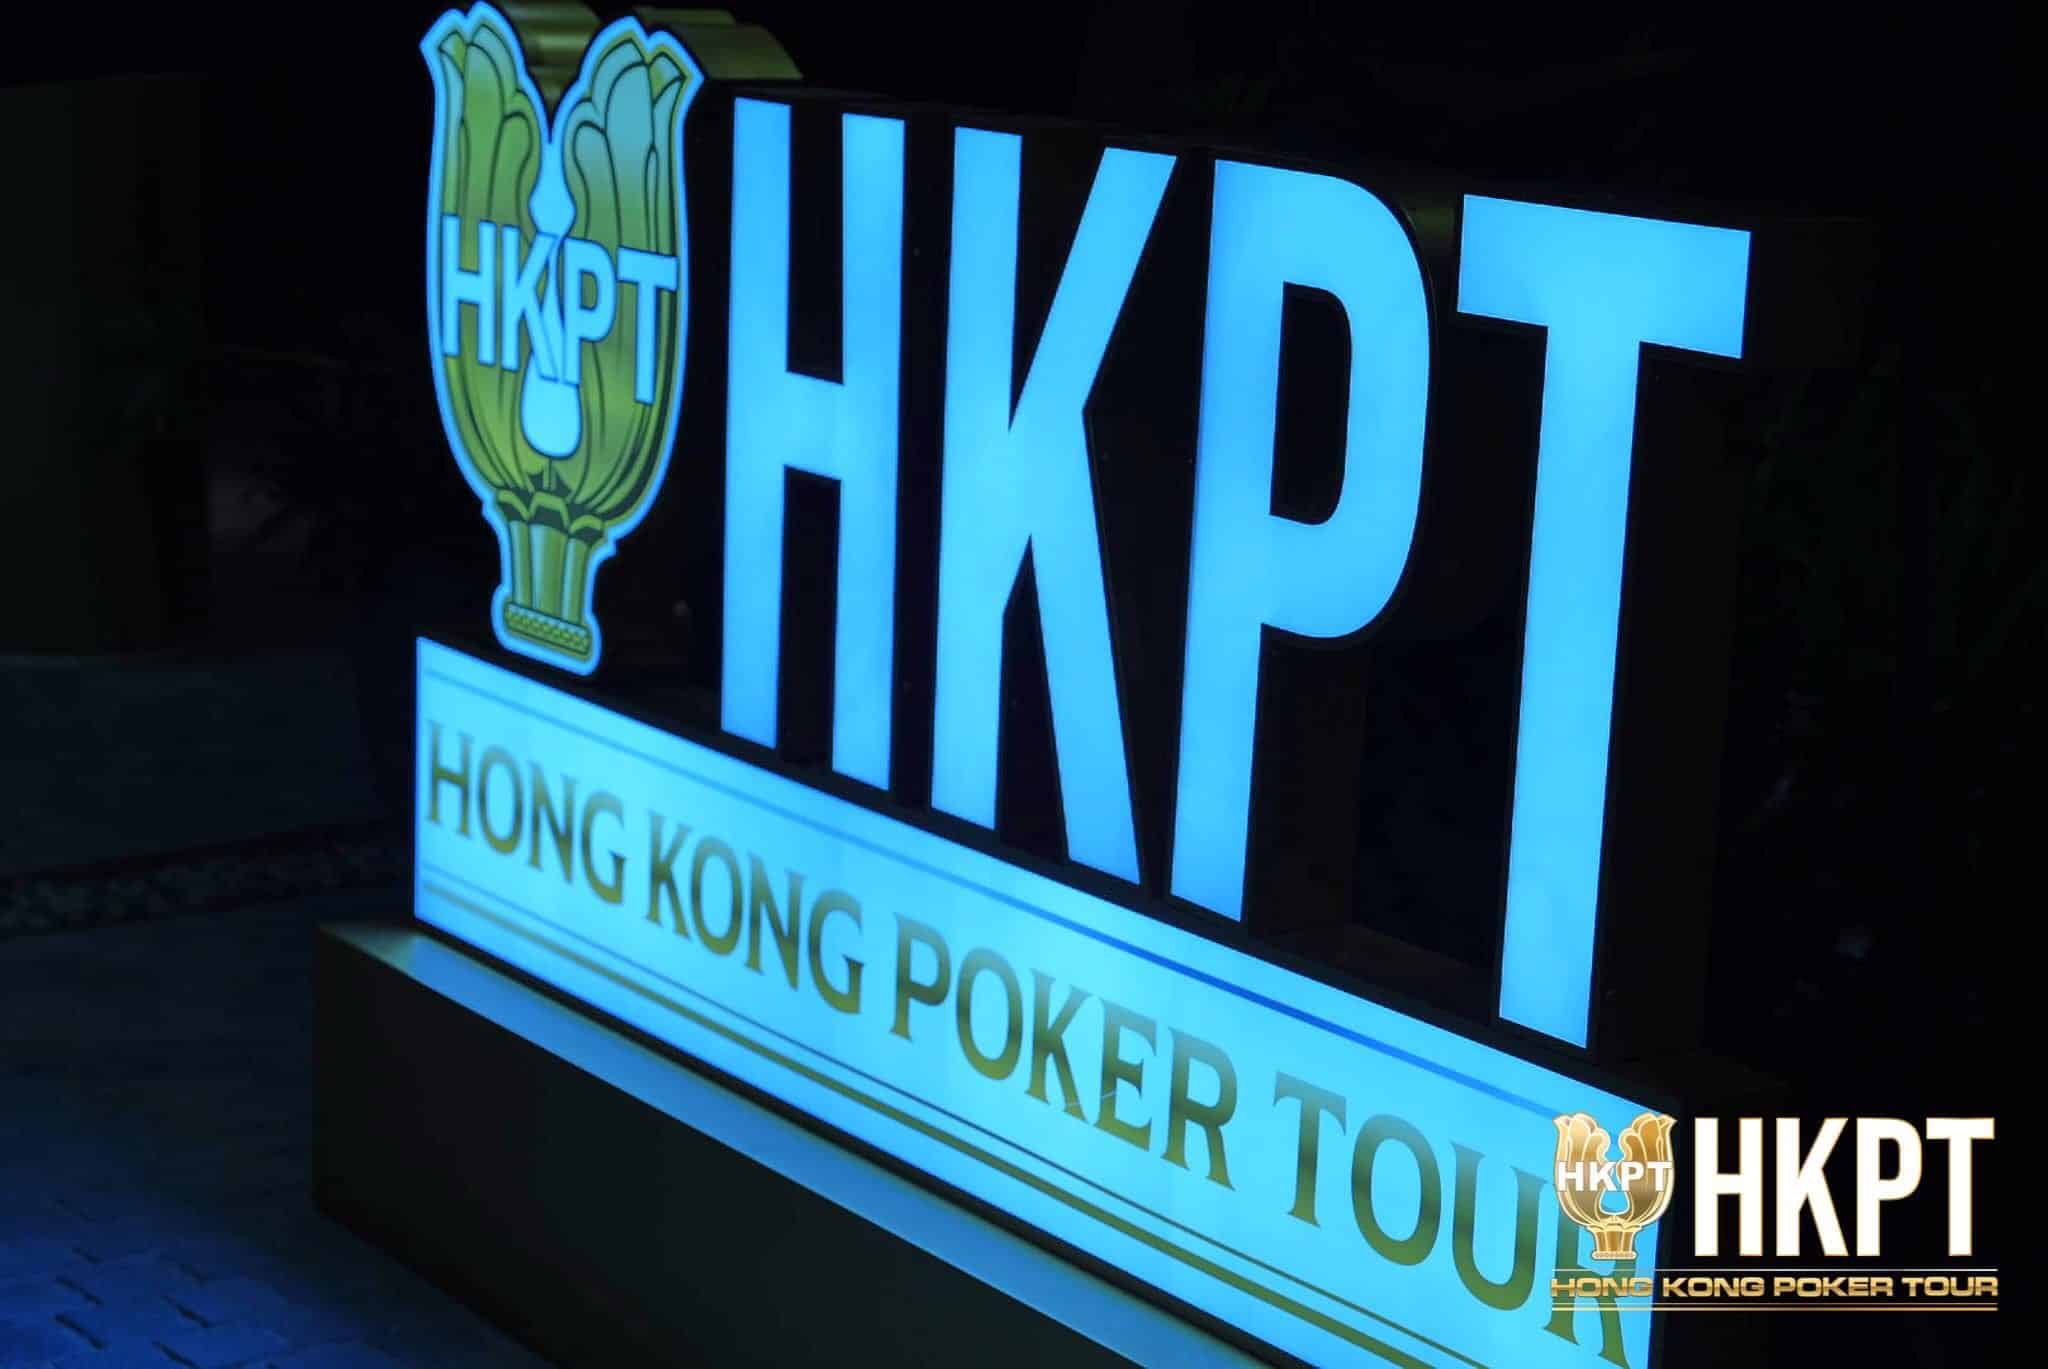 First Hong Kong Poker Tour festival in Vietnam underway at Dream Poker - September 19 to 28 in Hoi An